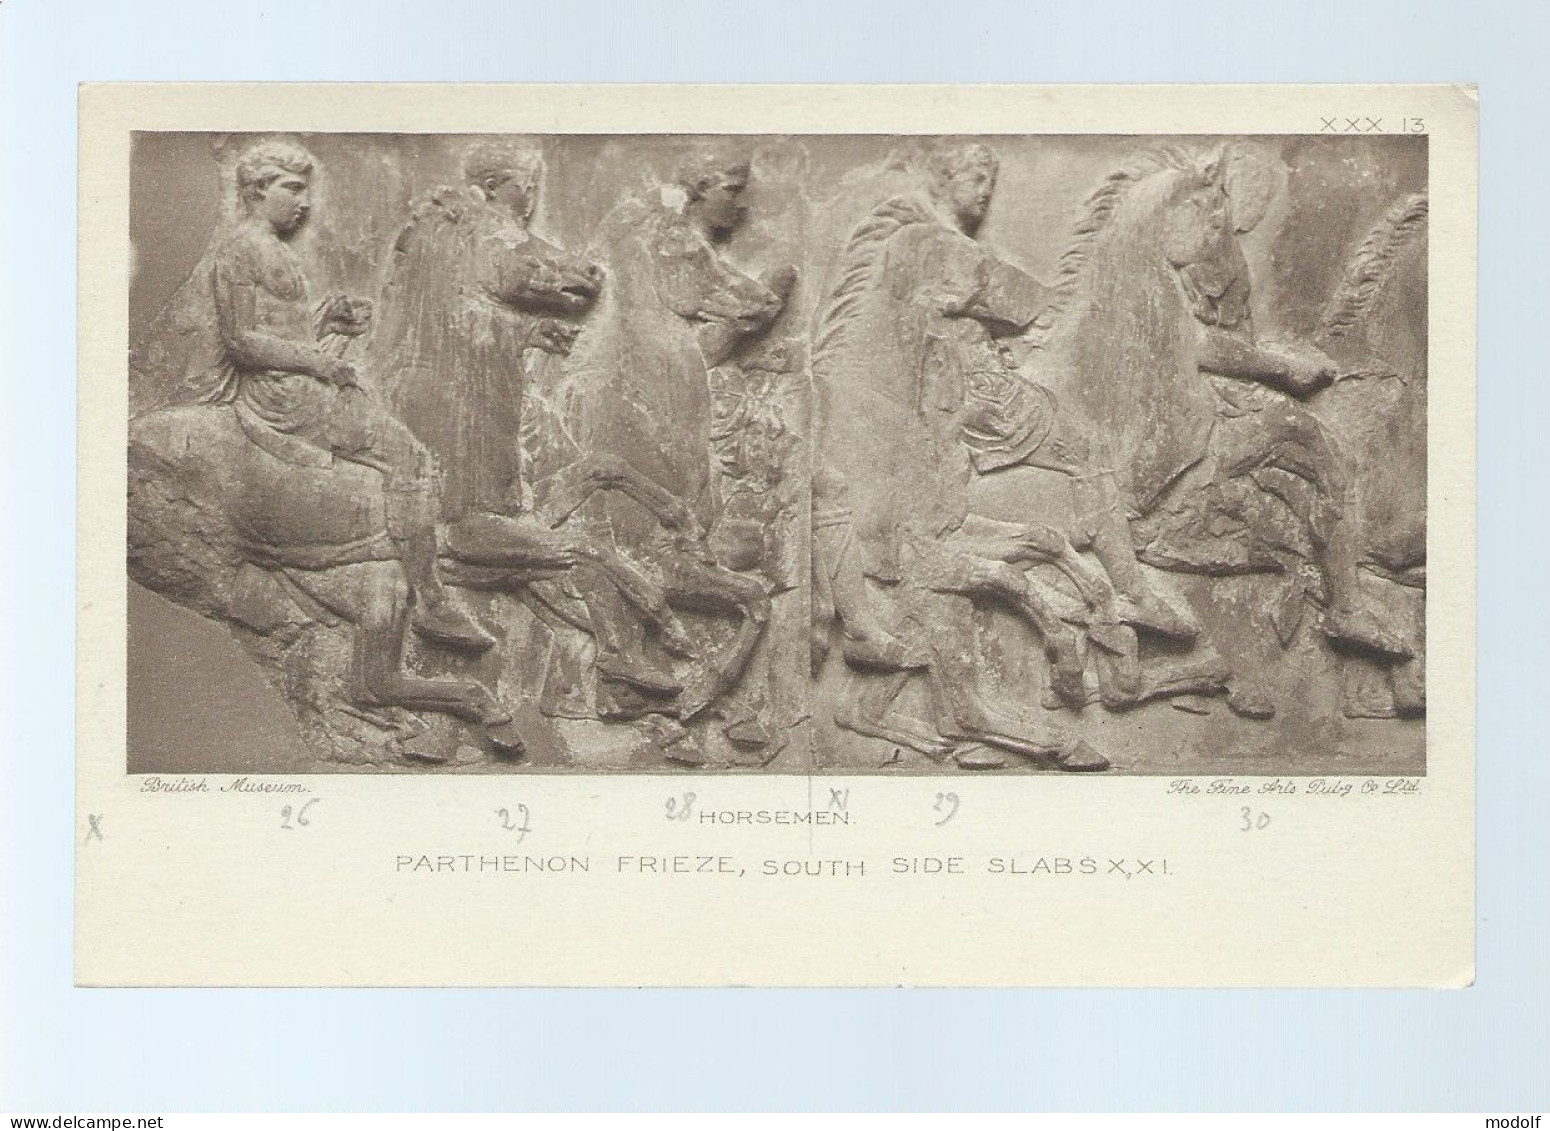 CPA - Arts - Sculptures - British Museum - Parthenon Frieze, South Side Slabs X,XI - Non Circulée - Sculptures